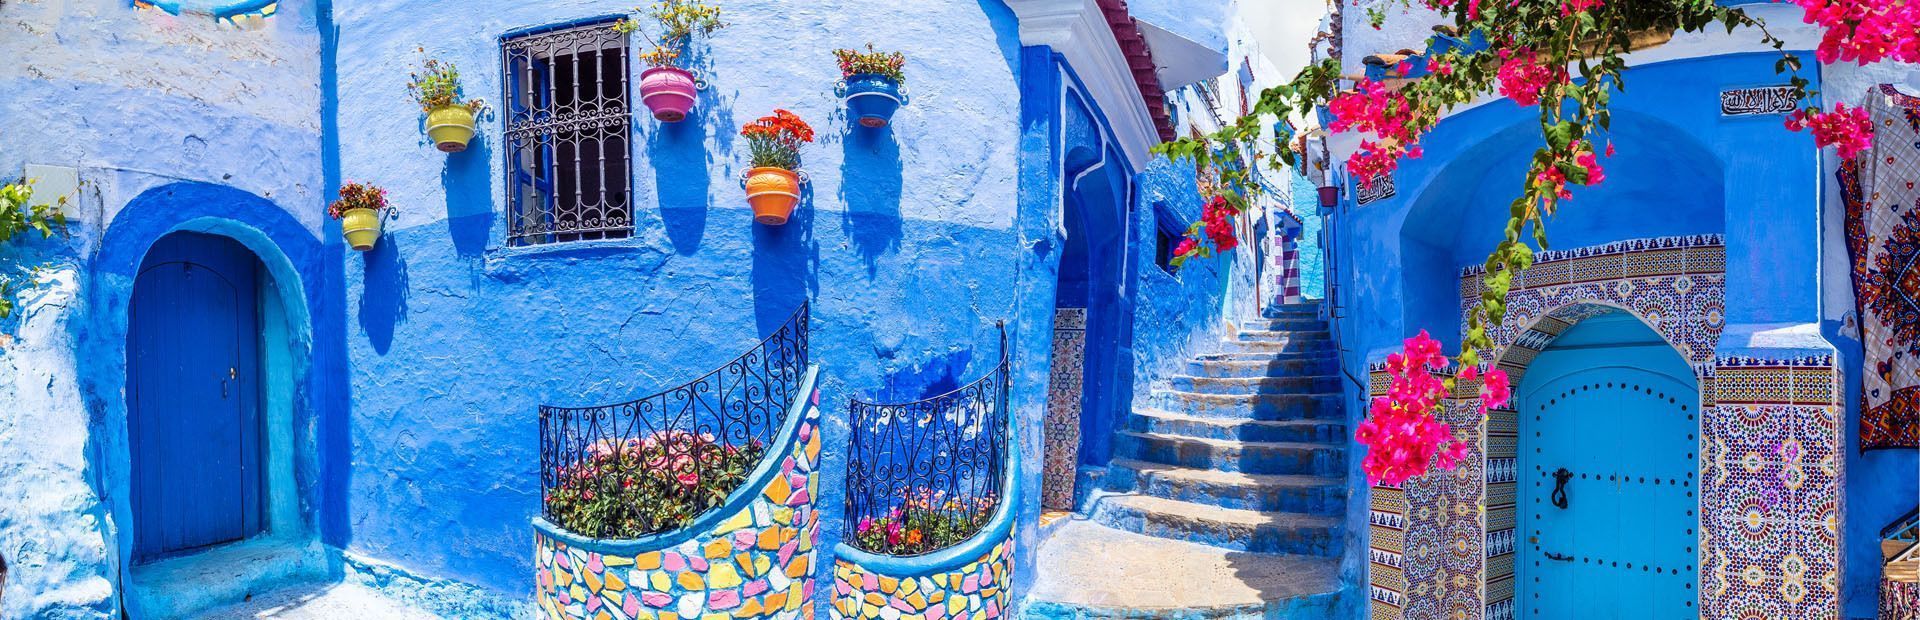 Case in Marocco colorati di blu - WeRoad